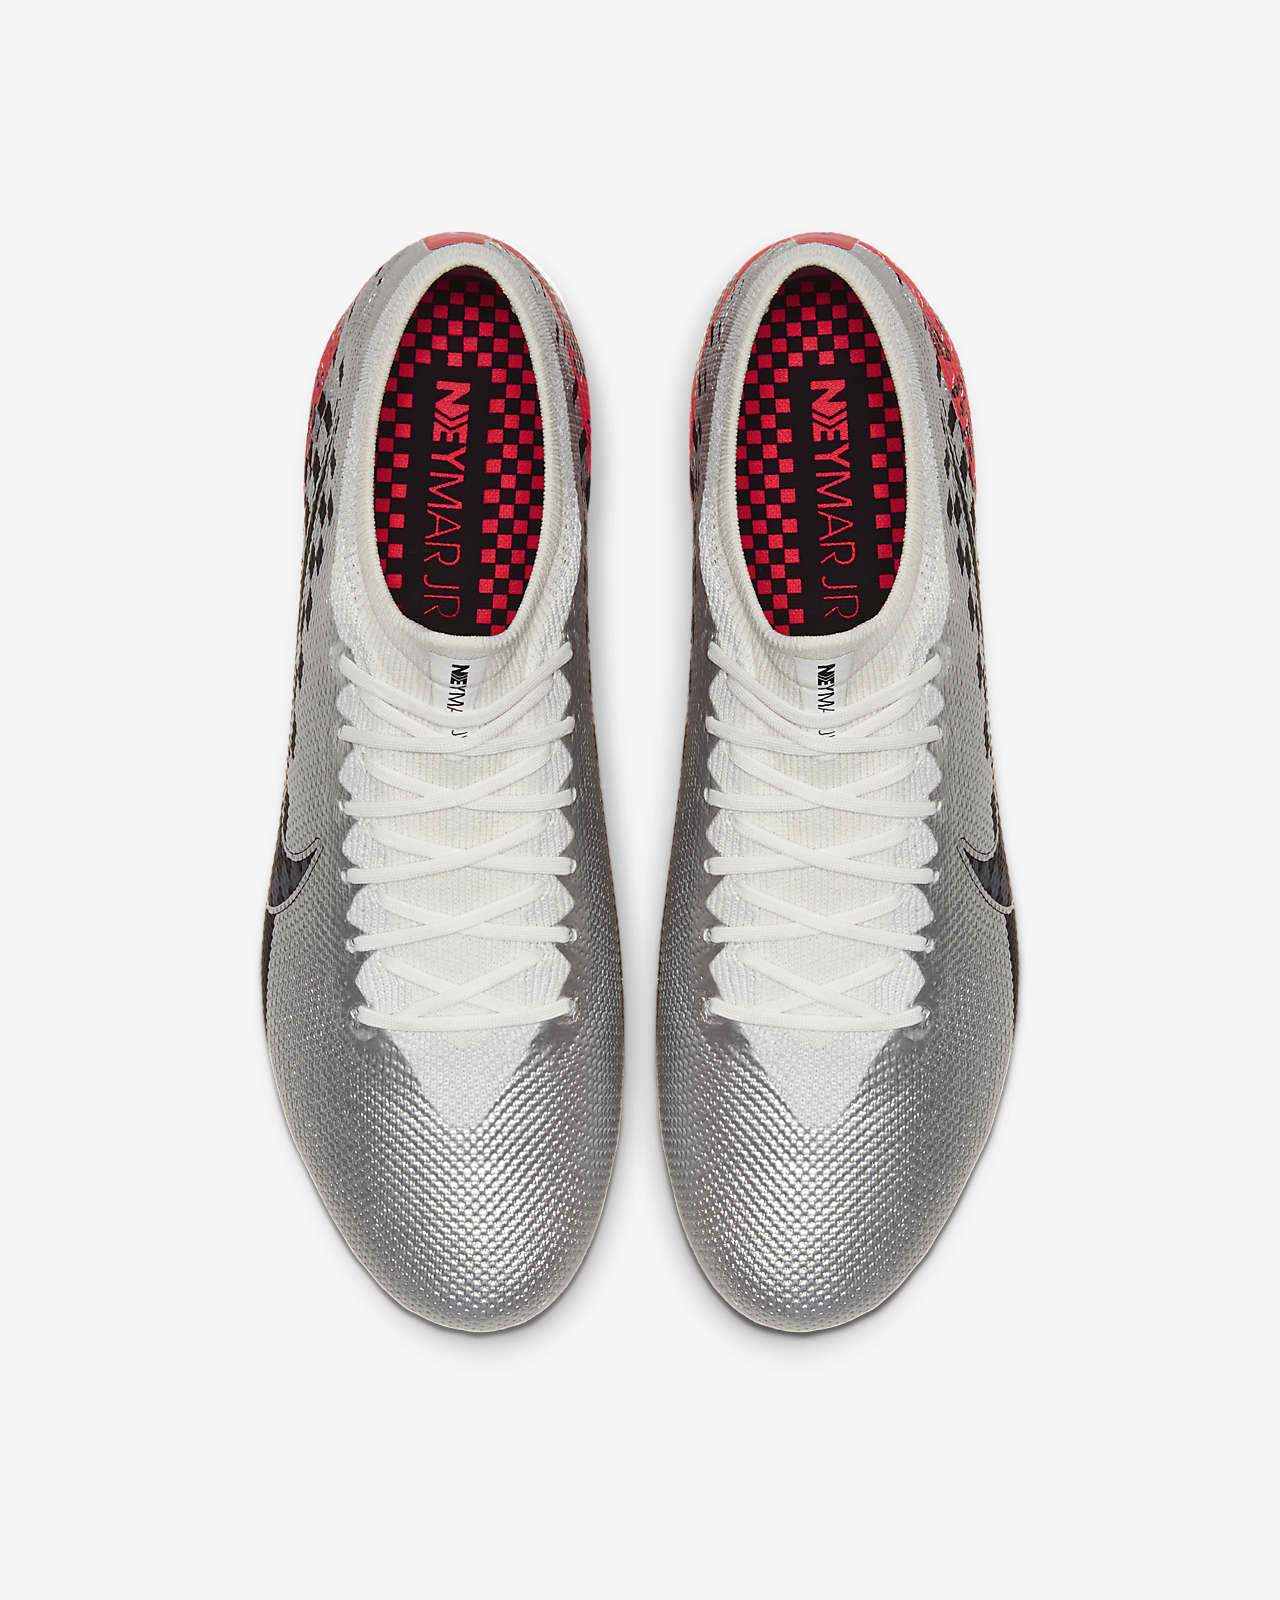 Nike Mercurial Vapor 13 Pro Neymar Jr. FG Firm-Ground Football Boots. Nike  LU